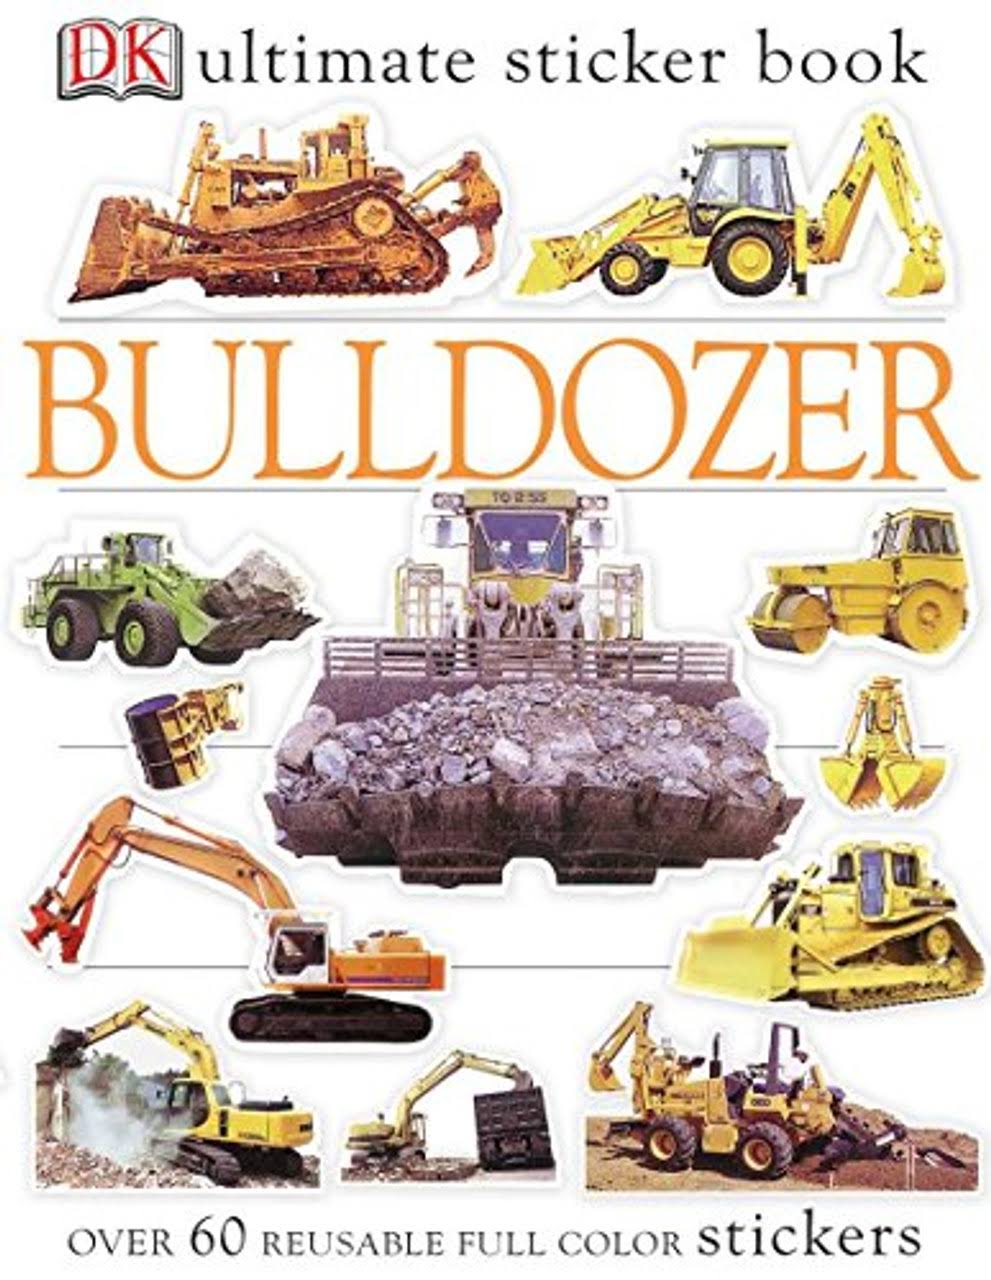 Ultimate Sticker Book: Bulldozer - DK Publishing